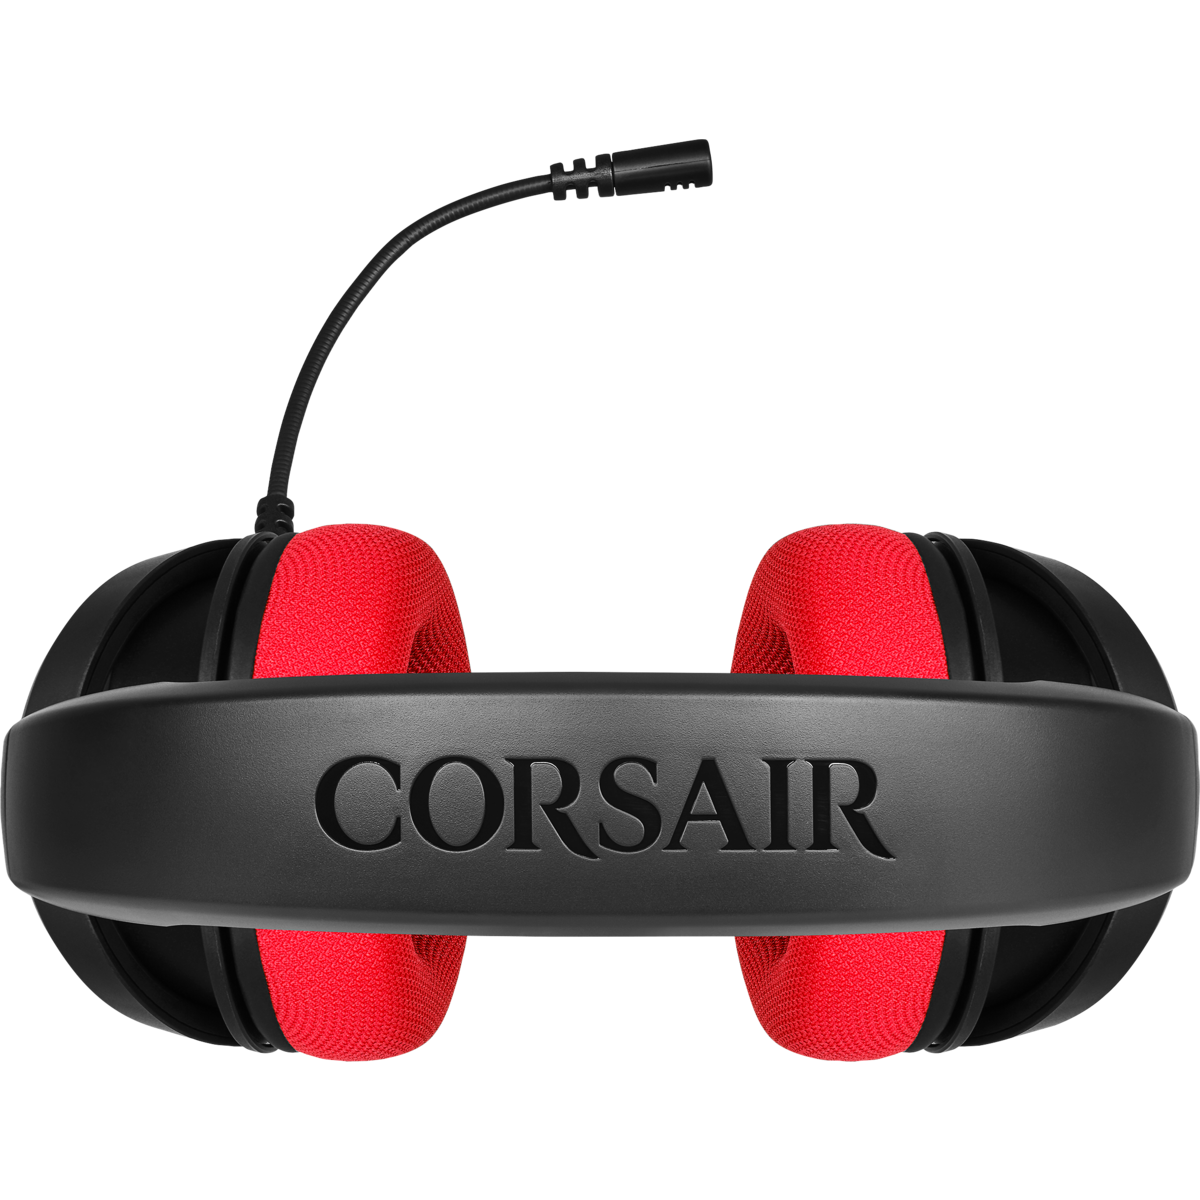 Headset Gamer Corsair HS35 Stereo Red, CA-9011198-NA